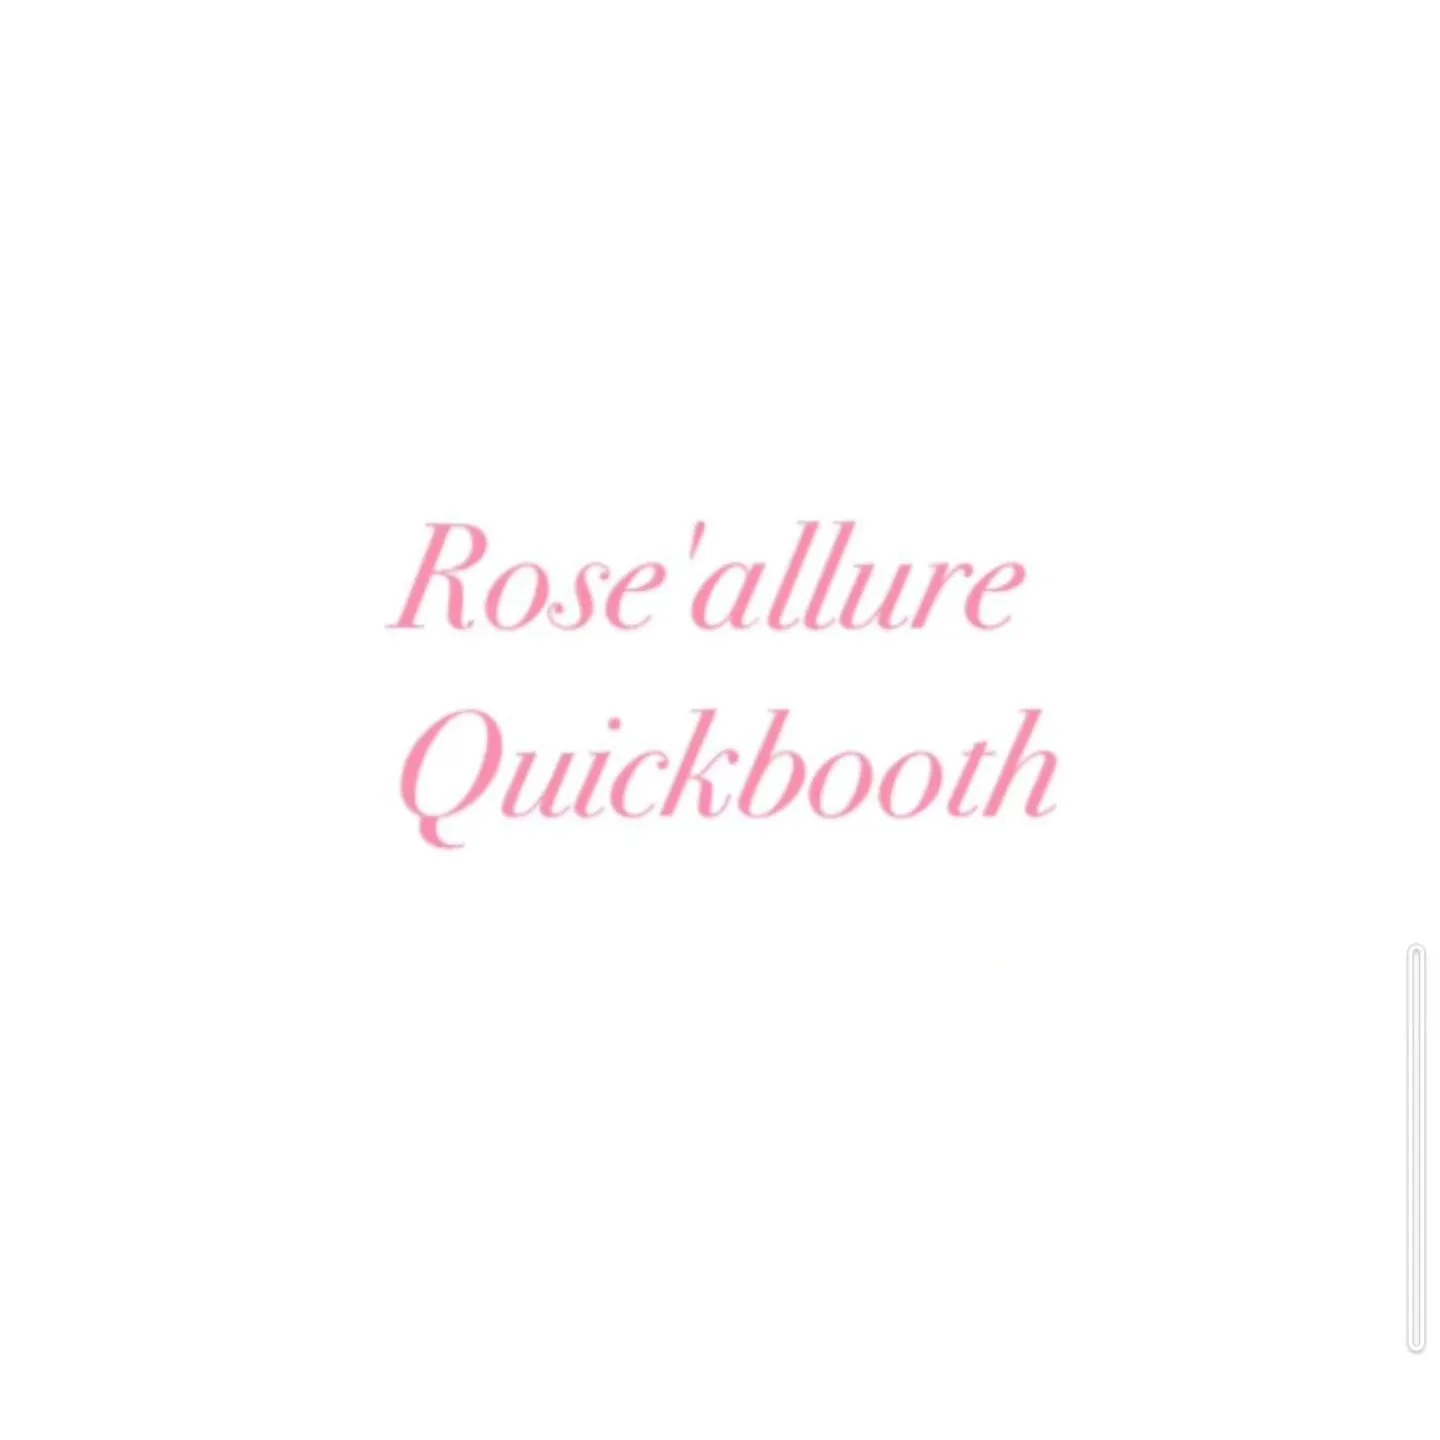 【ROSE allure  クイックブース】@roseall...